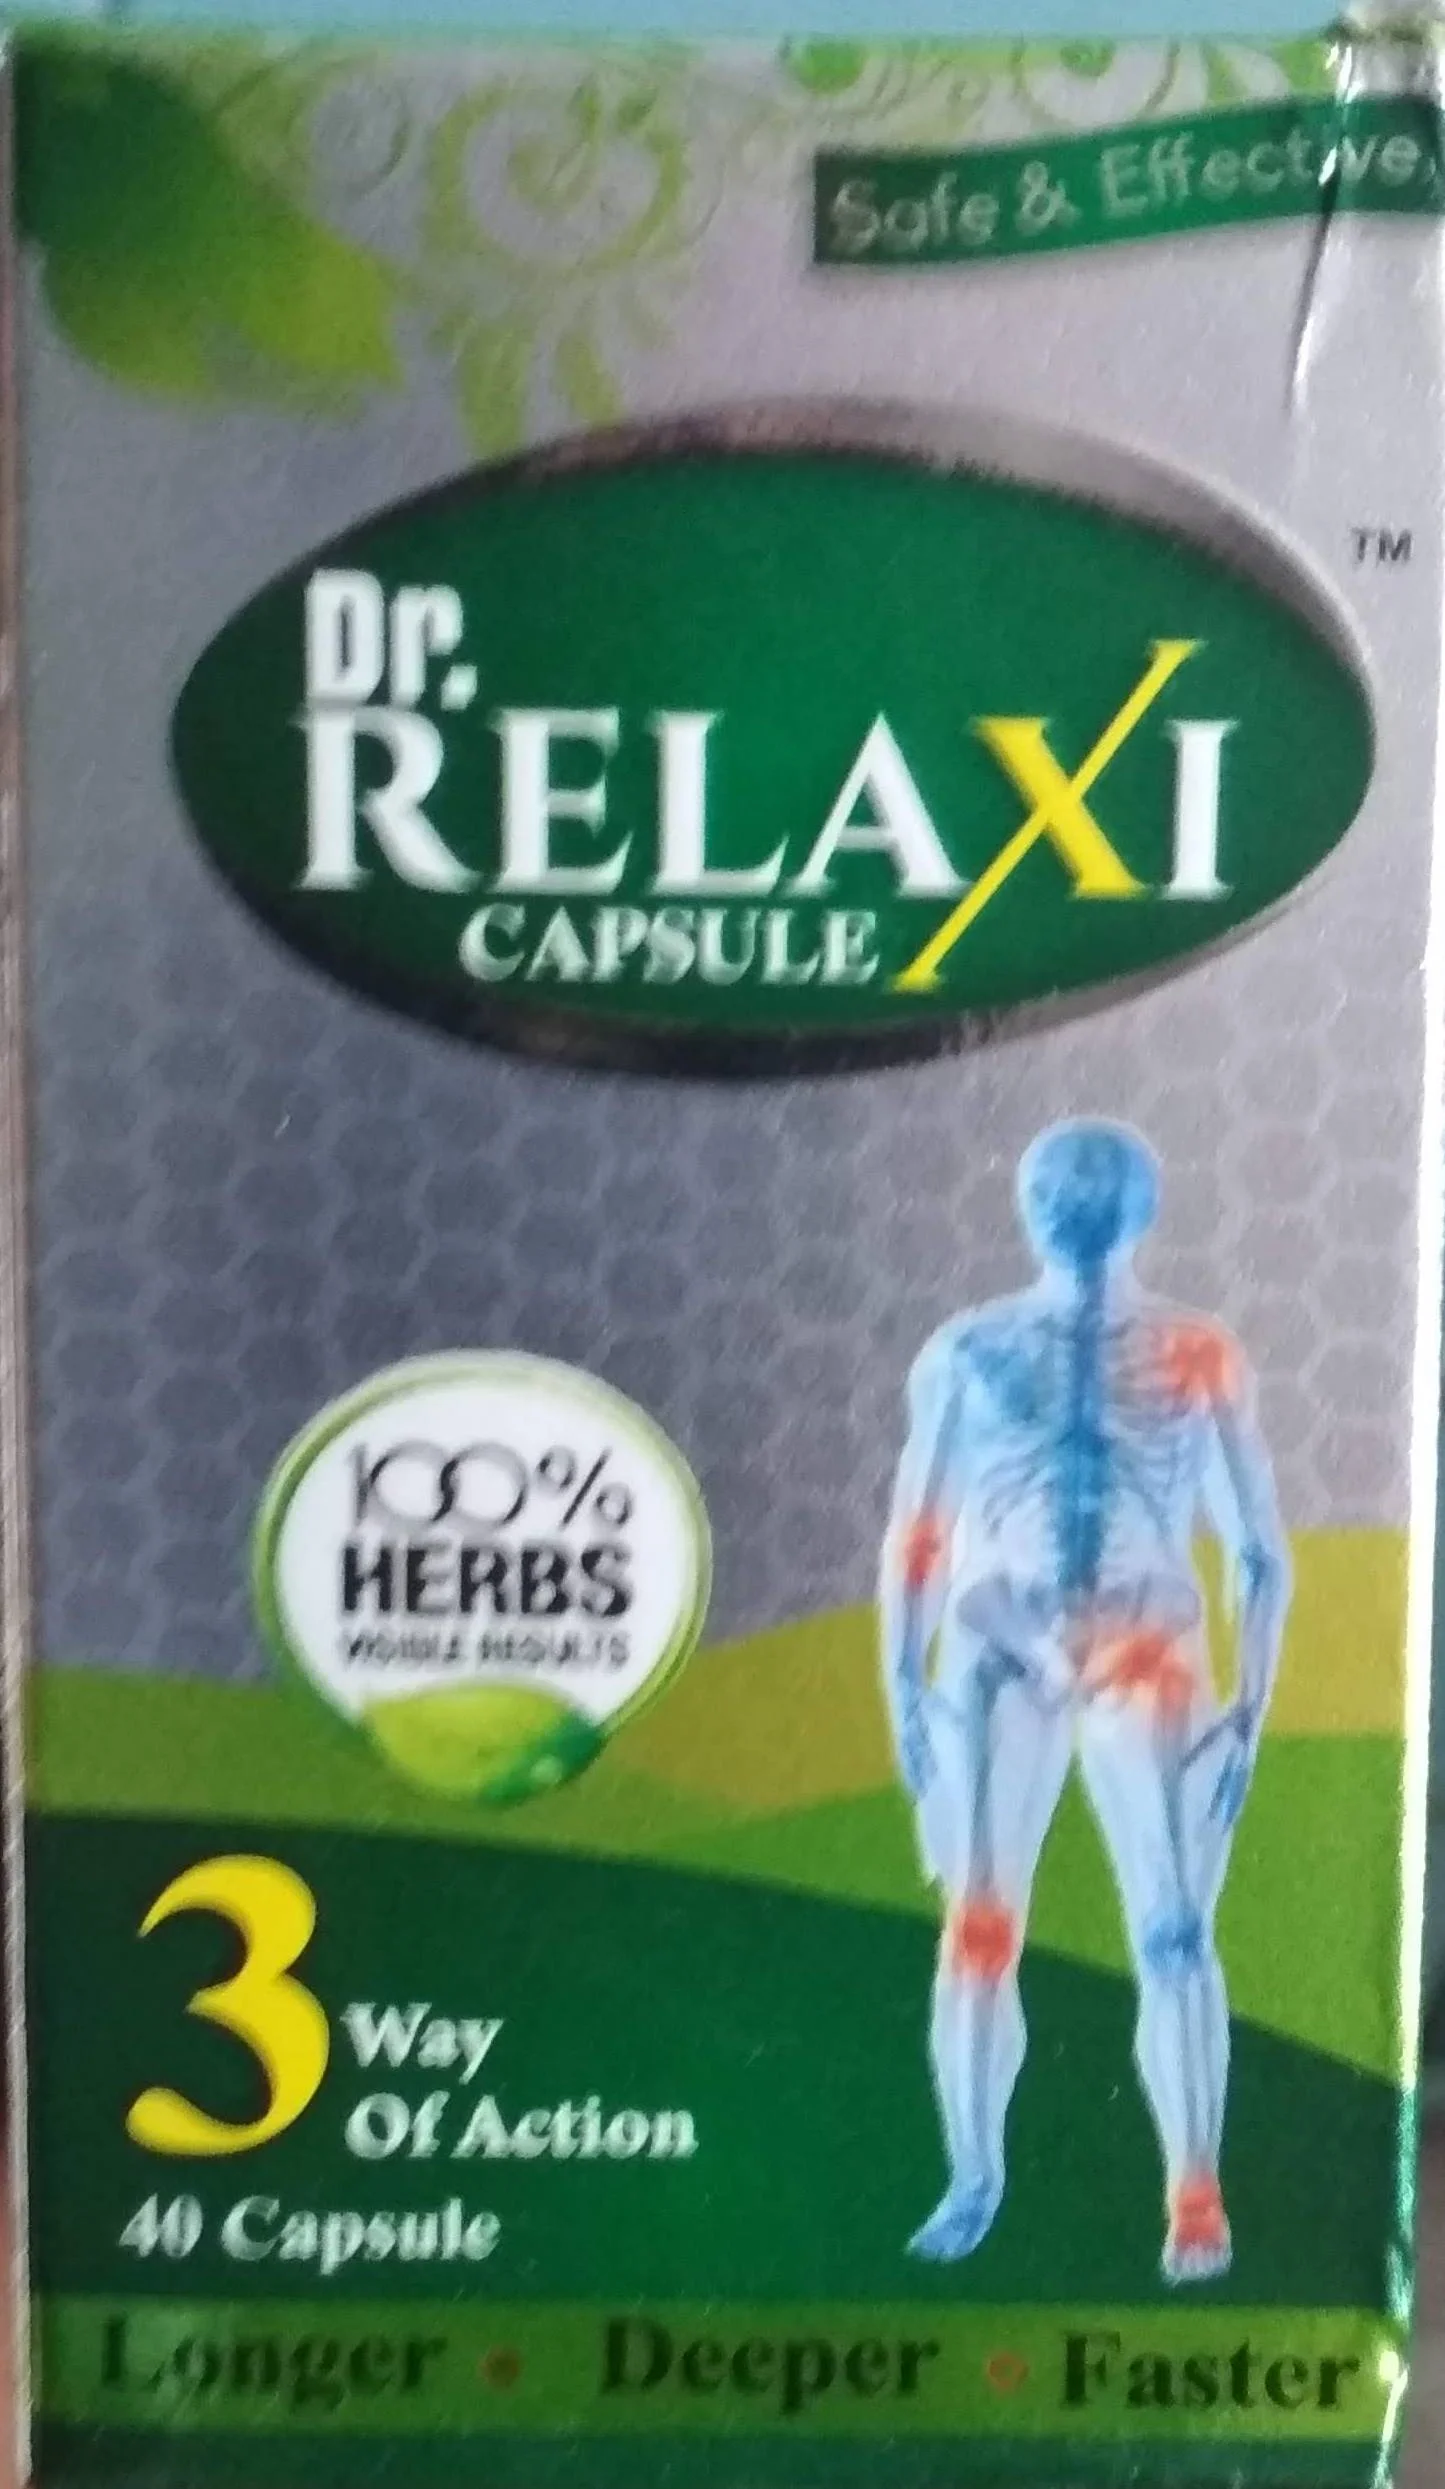 Dr Relaxi Herbal Capsules for Joints Pain 40cap Rajasthan Aushdhalaya